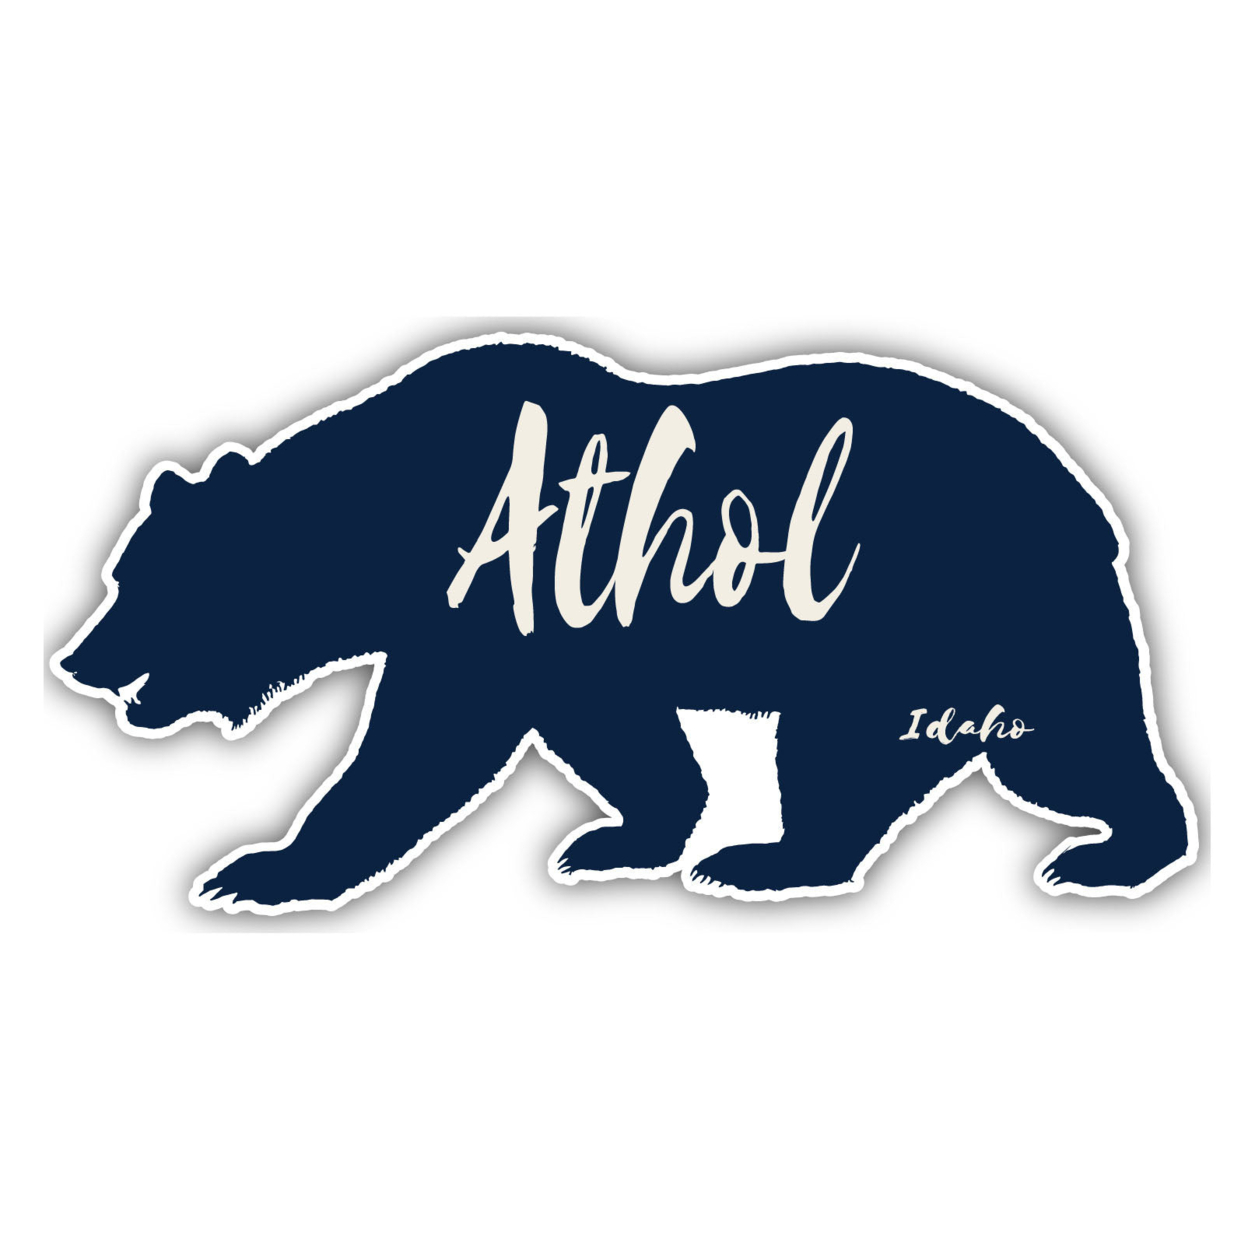 Athol Idaho Souvenir Decorative Stickers (Choose Theme And Size) - Single Unit, 6-Inch, Bear